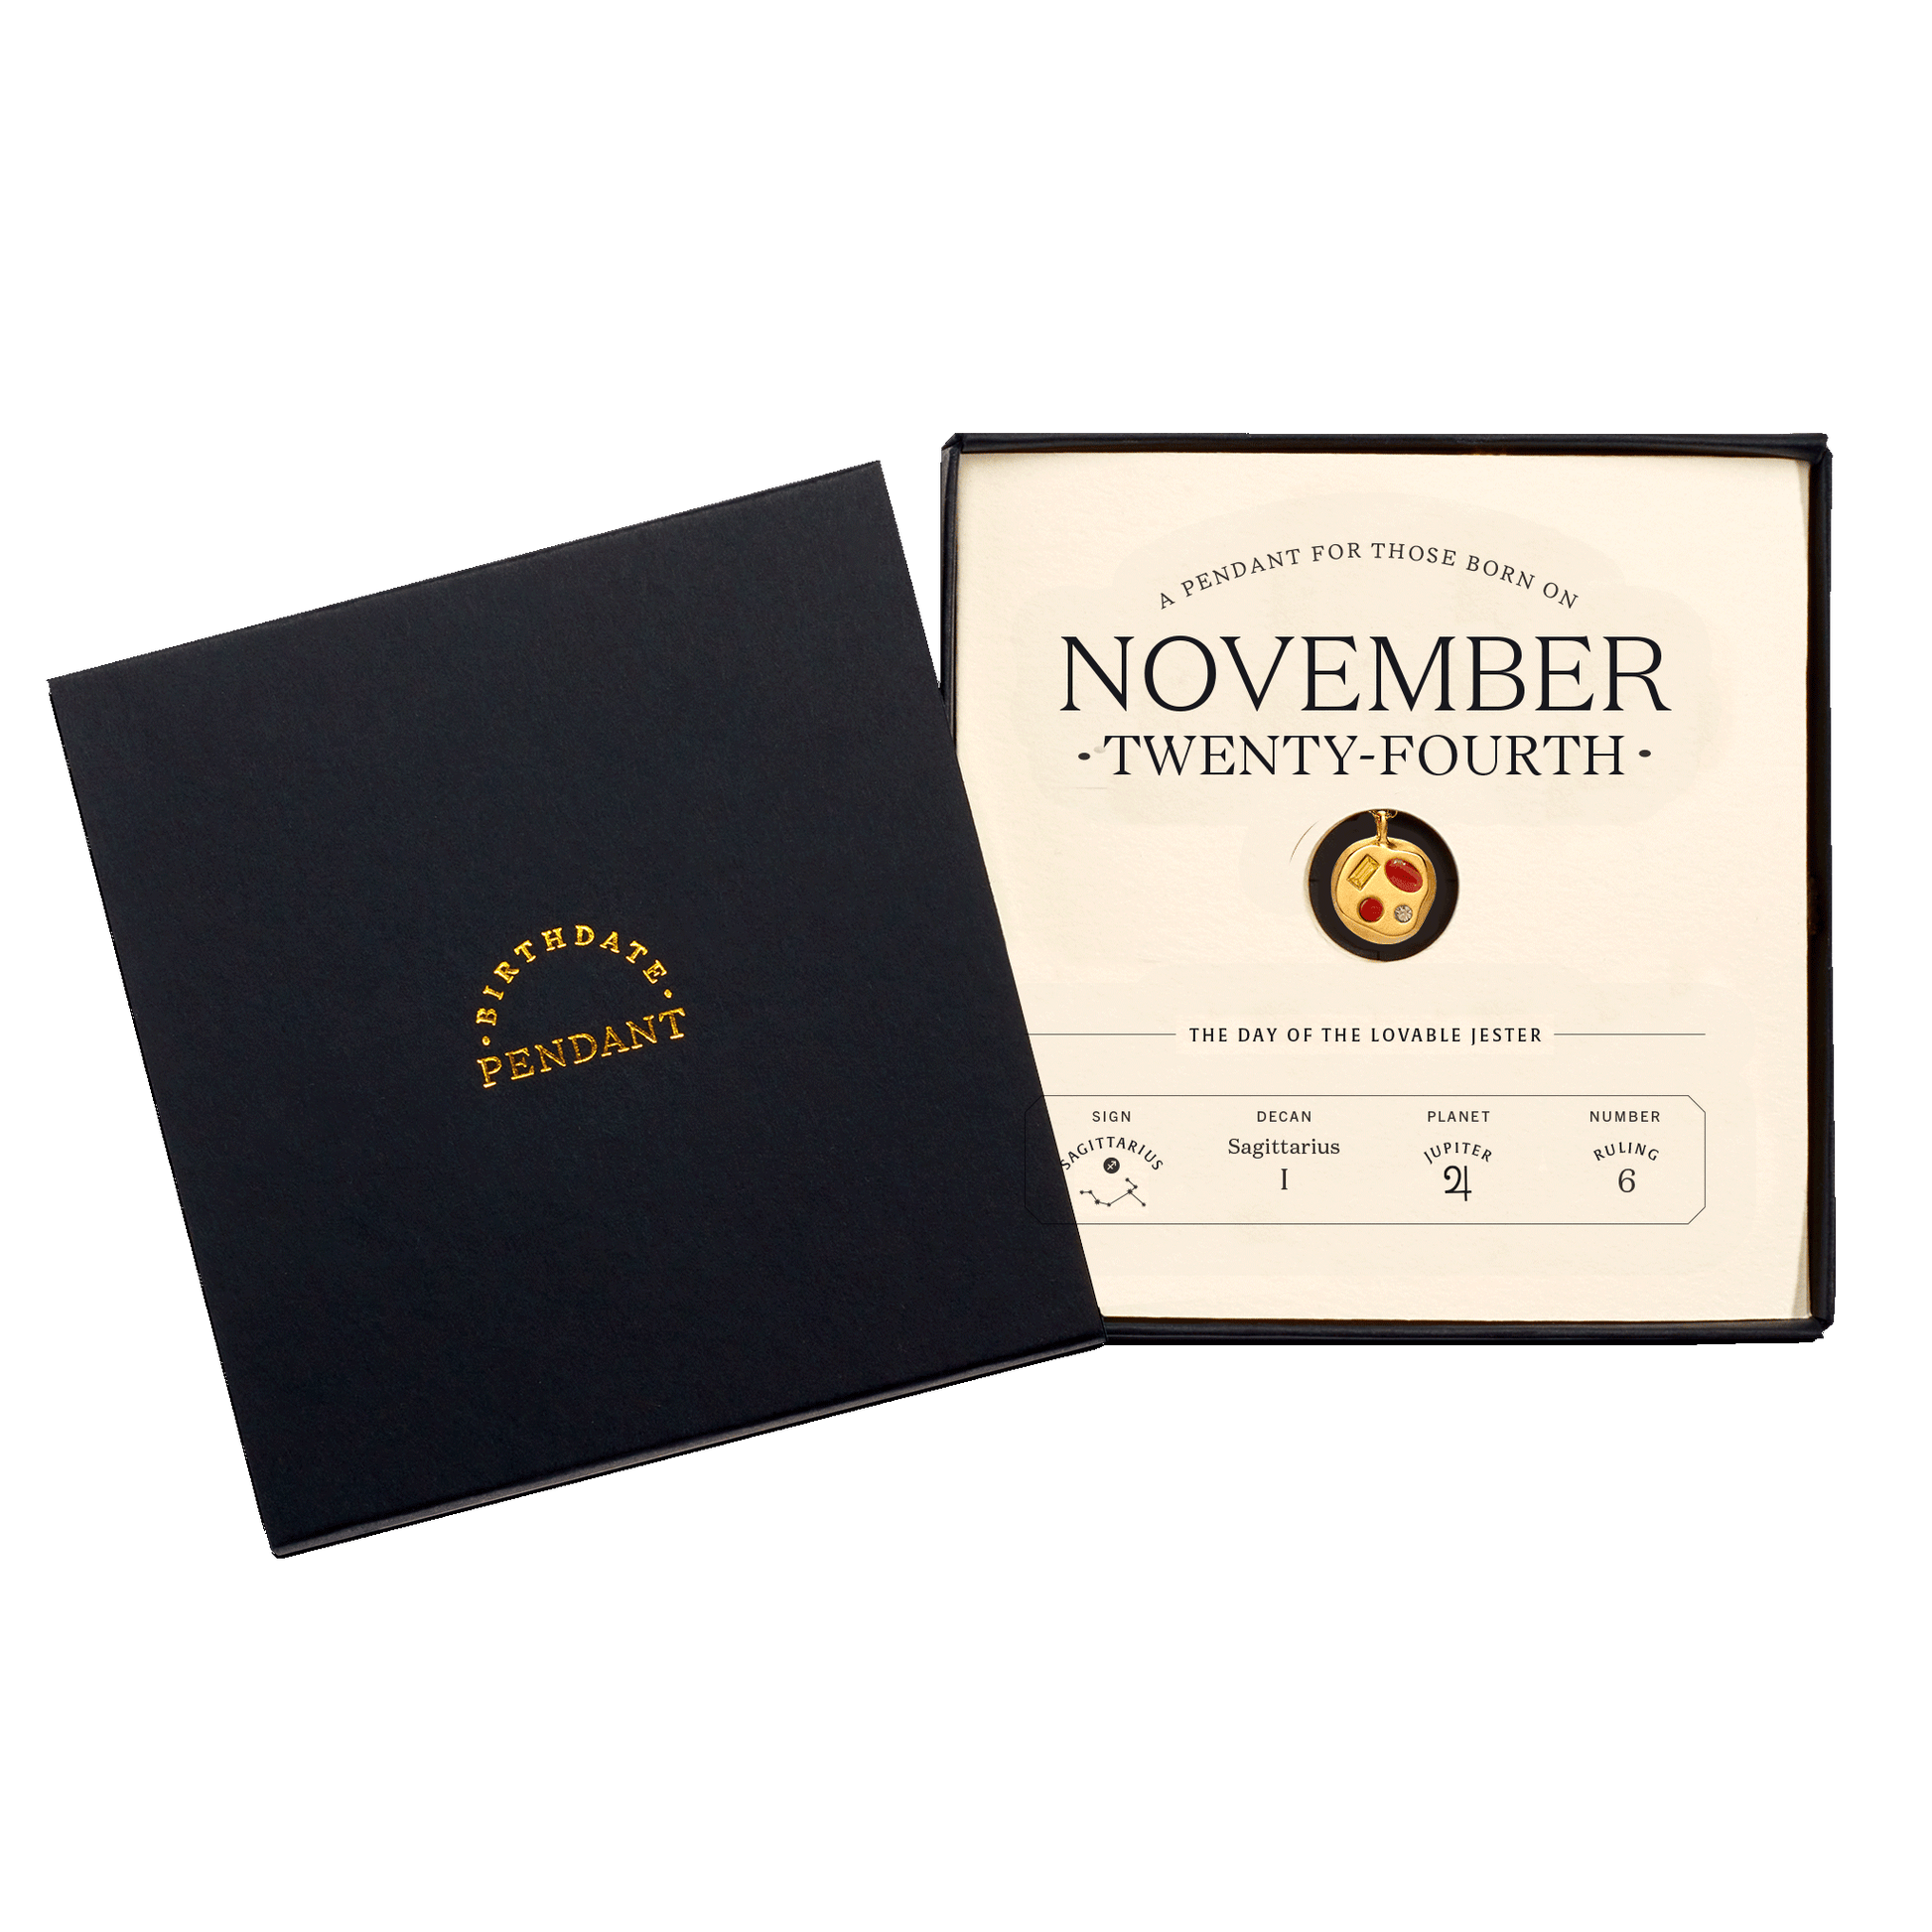 The November Twenty-Fourth Pendant inside its box